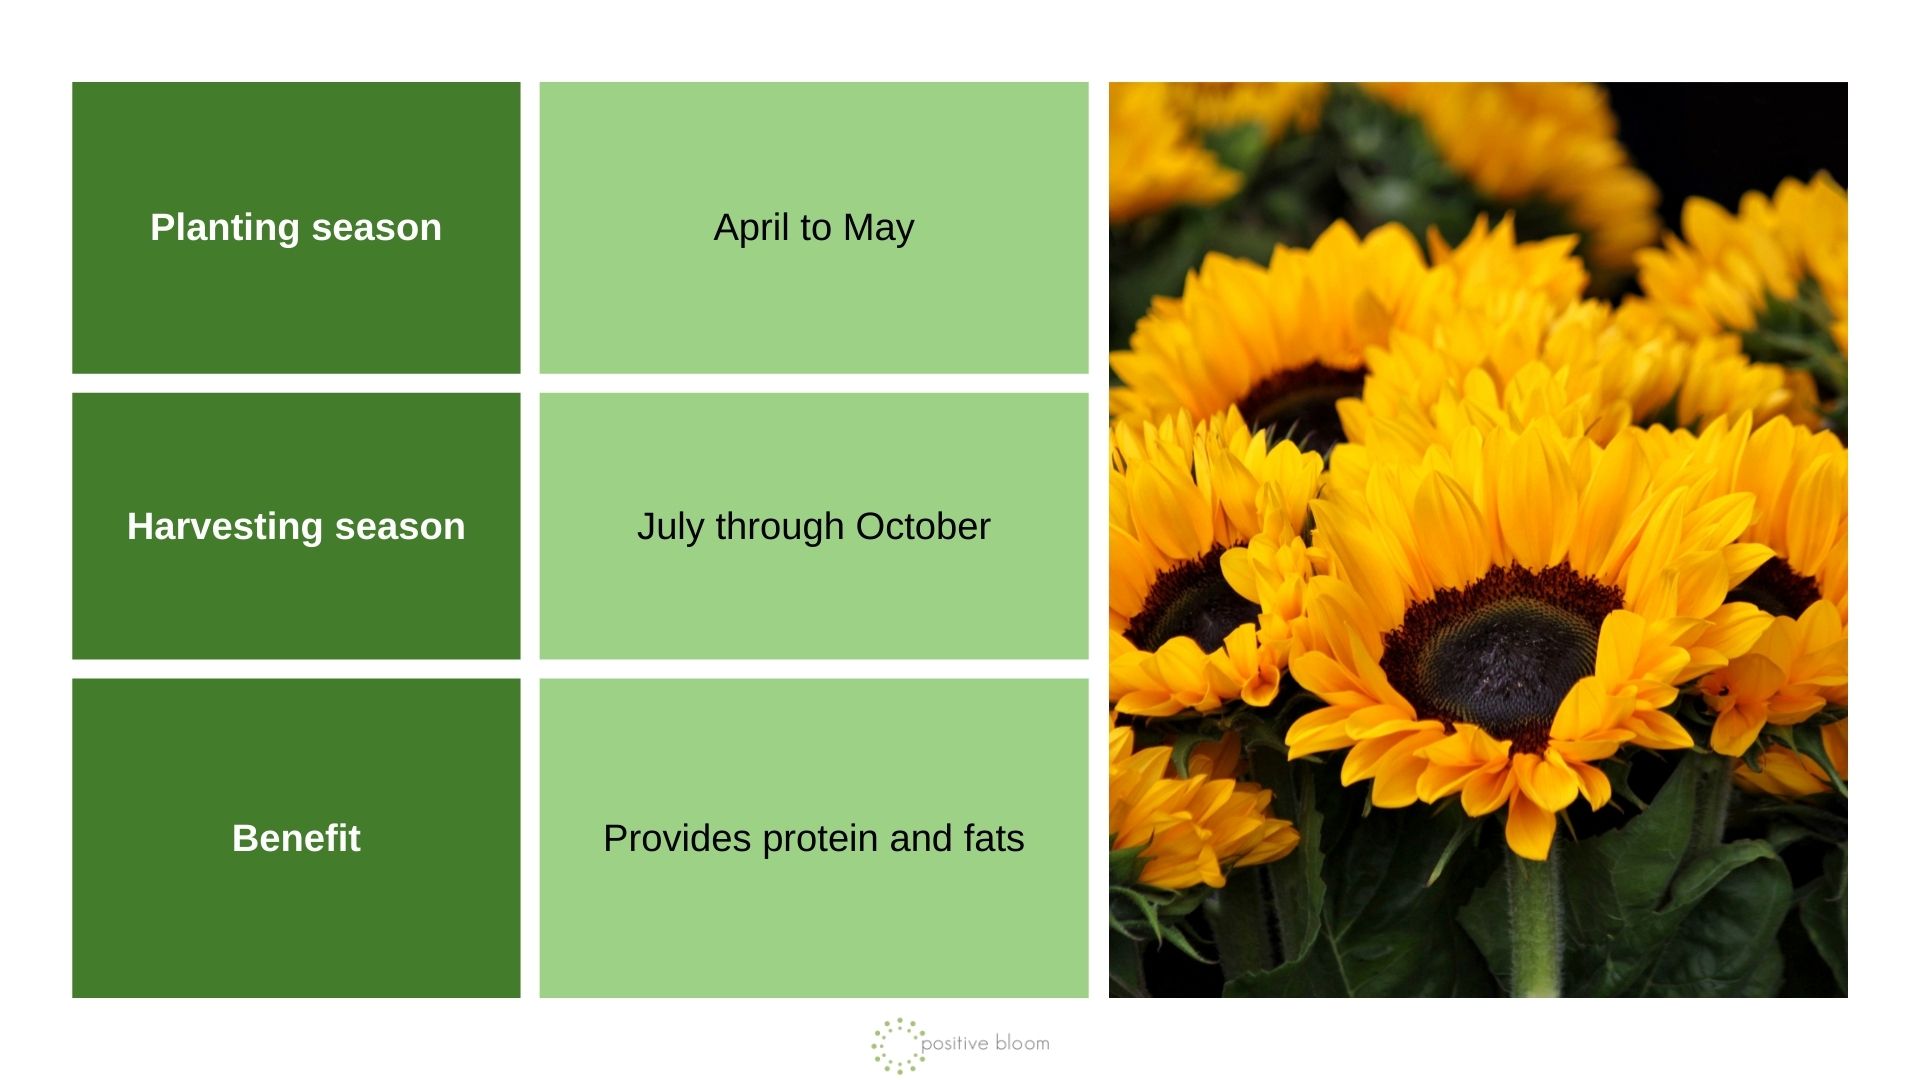 Sunflowers info chart and photo